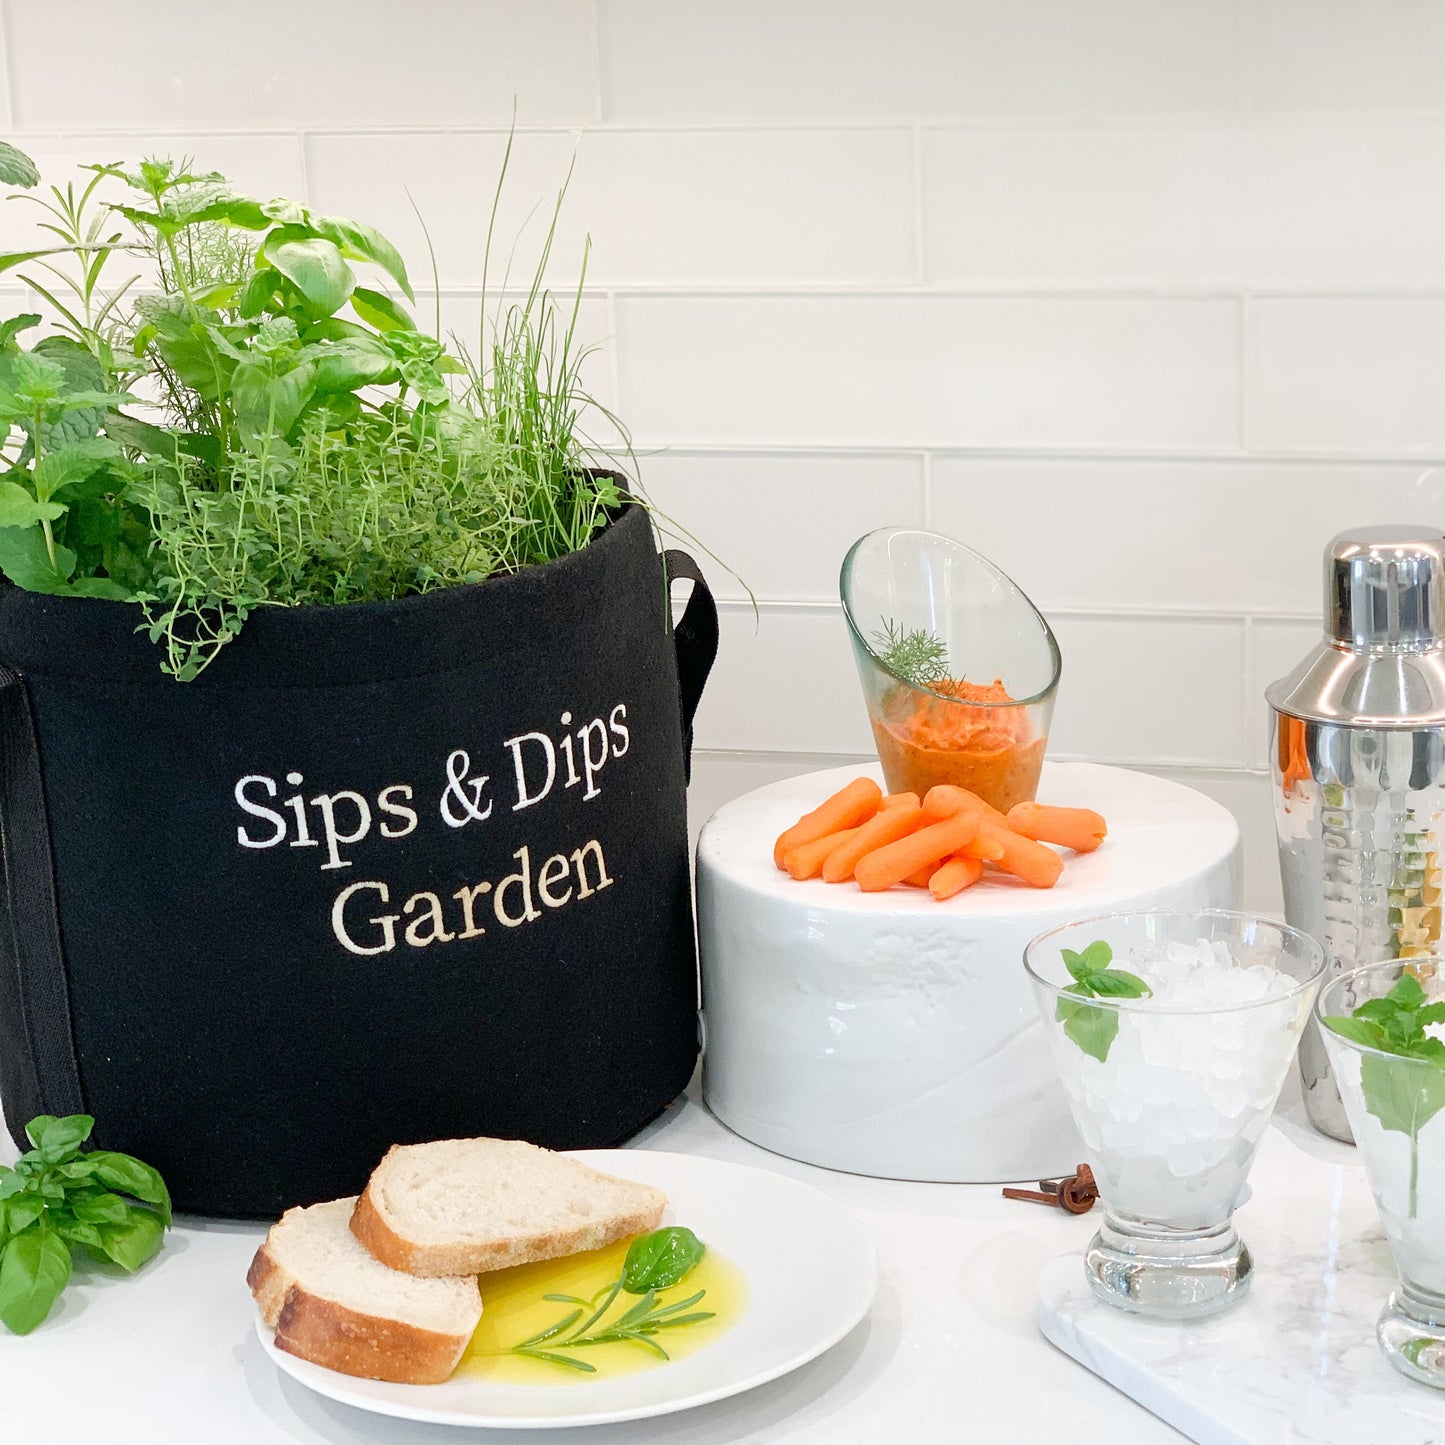 Sips & Dips Garden Kit with seasonal herb plants